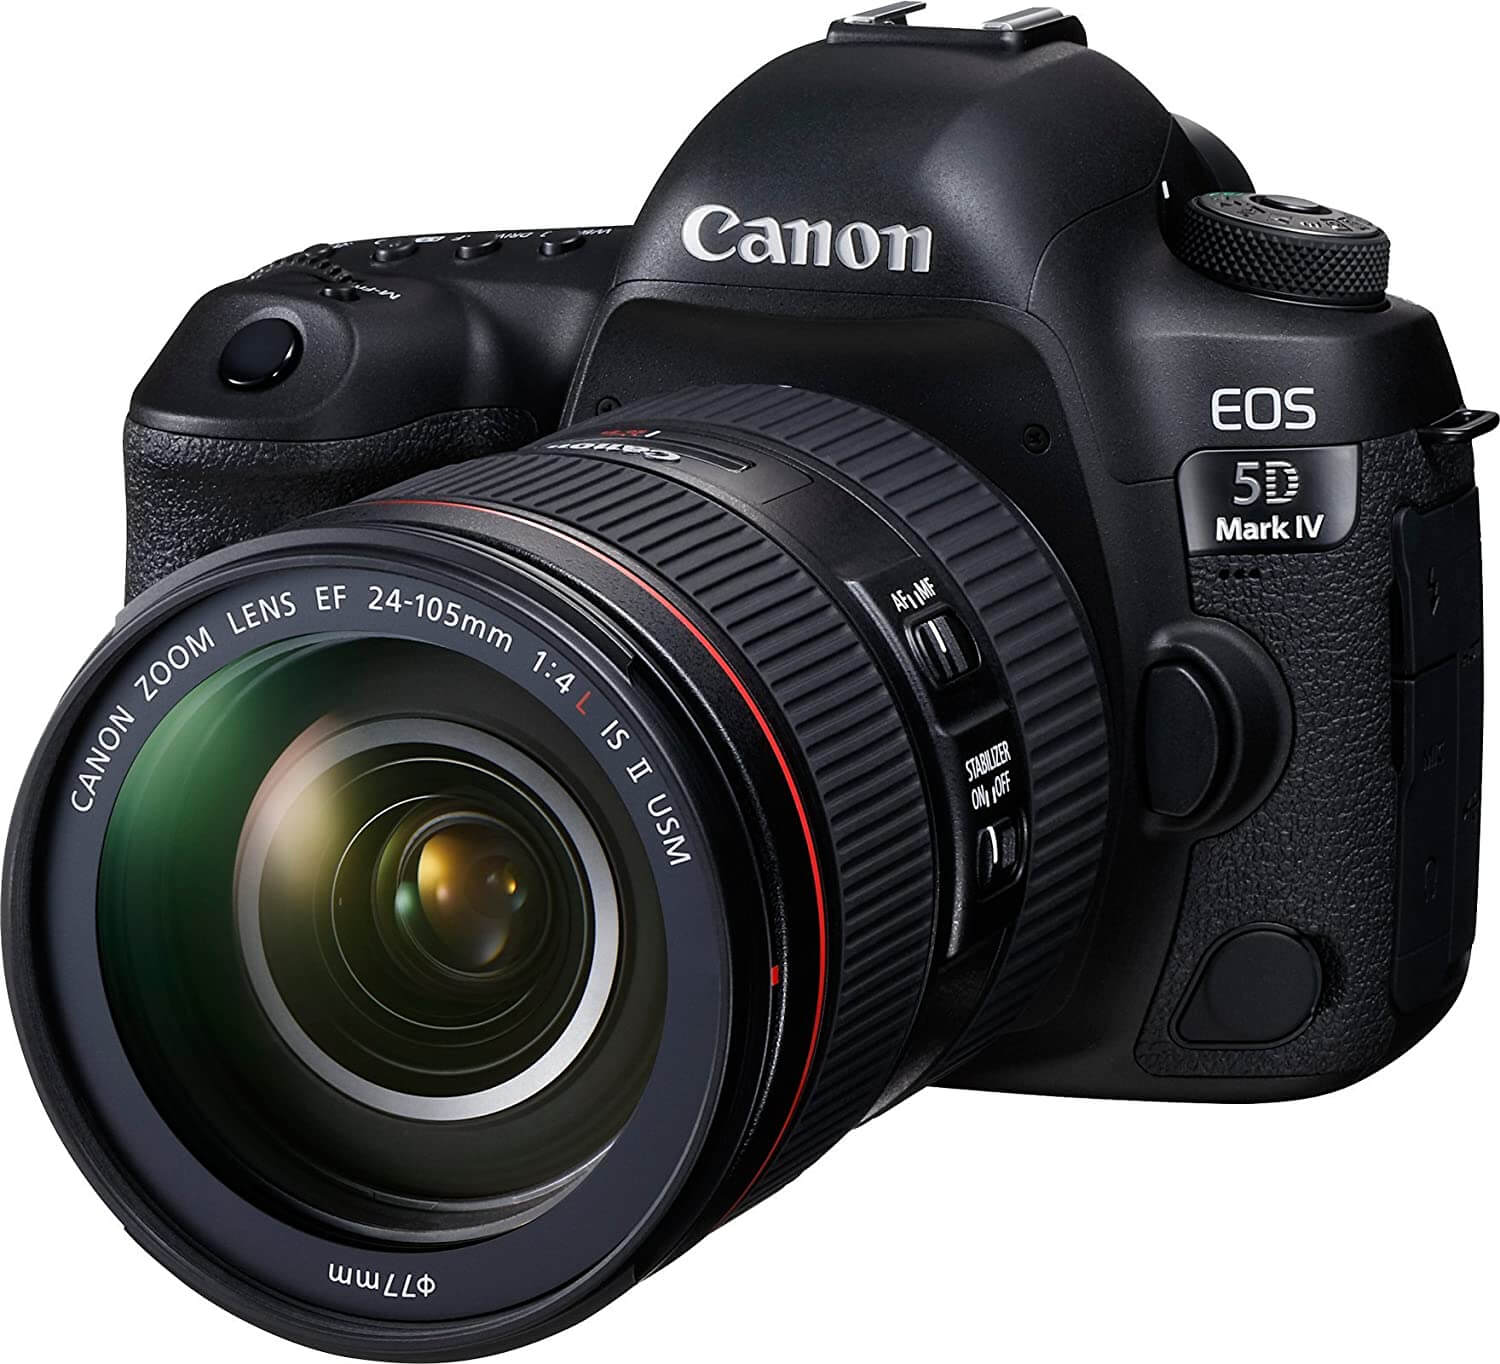 Canon EOS 5D Mark IV camera for YouTube